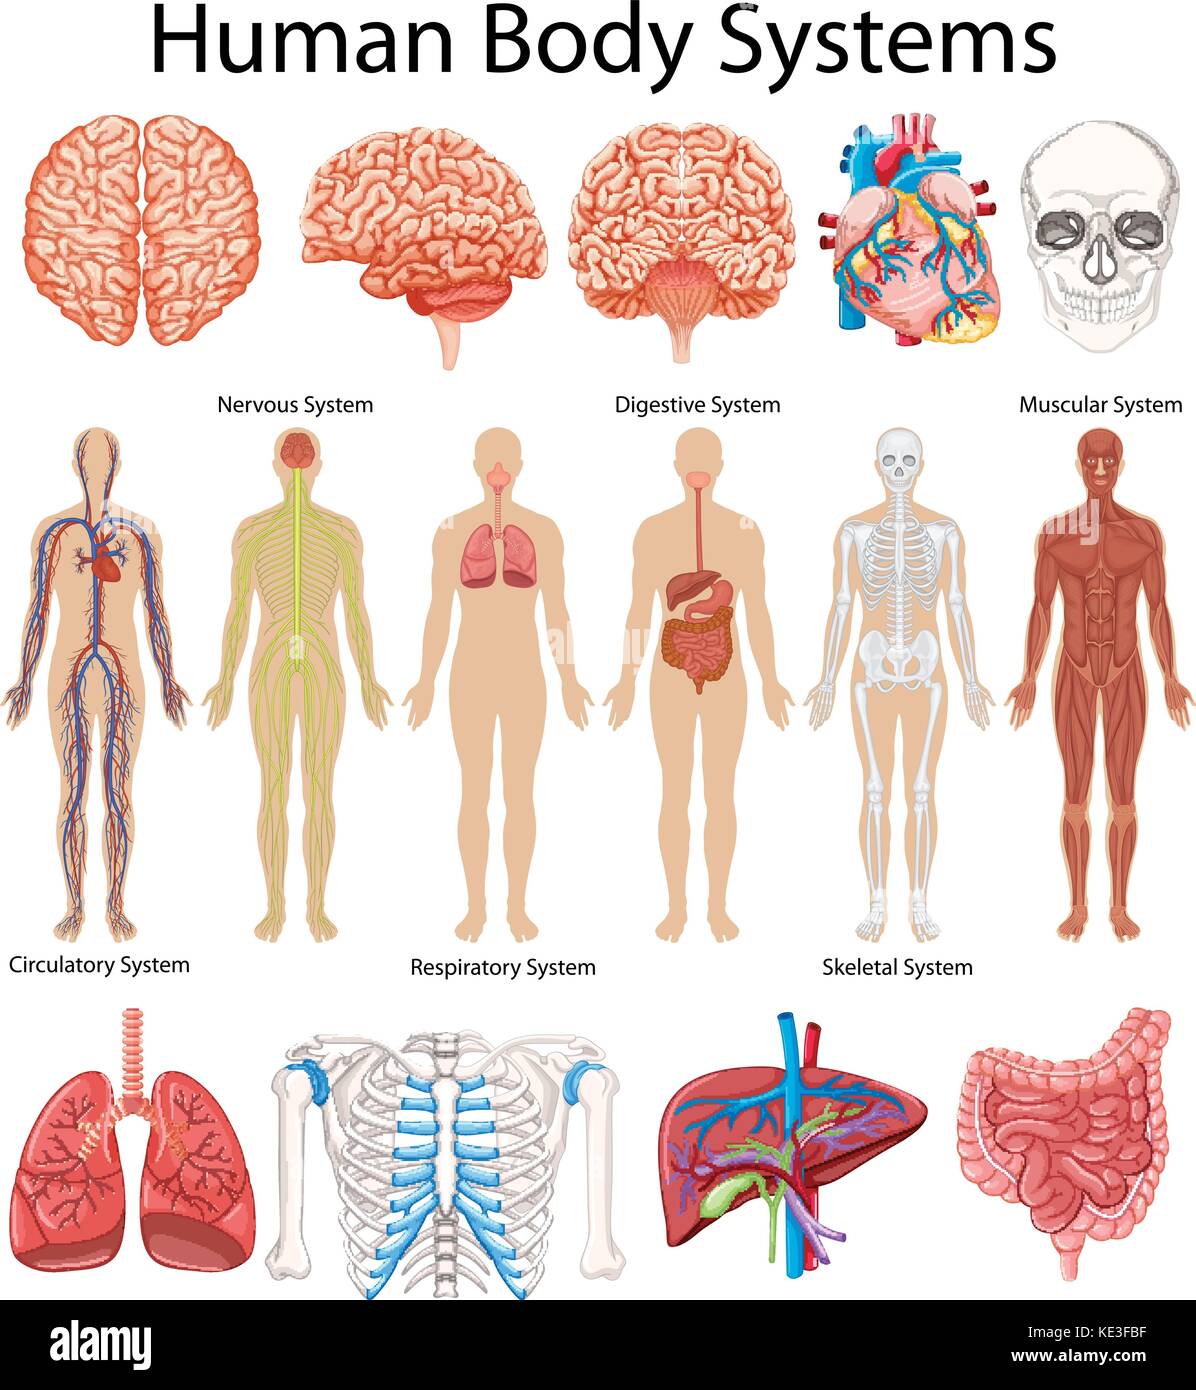 Human Body Anatomy Diagram Stock Photos And Human Body Anatomy Diagram